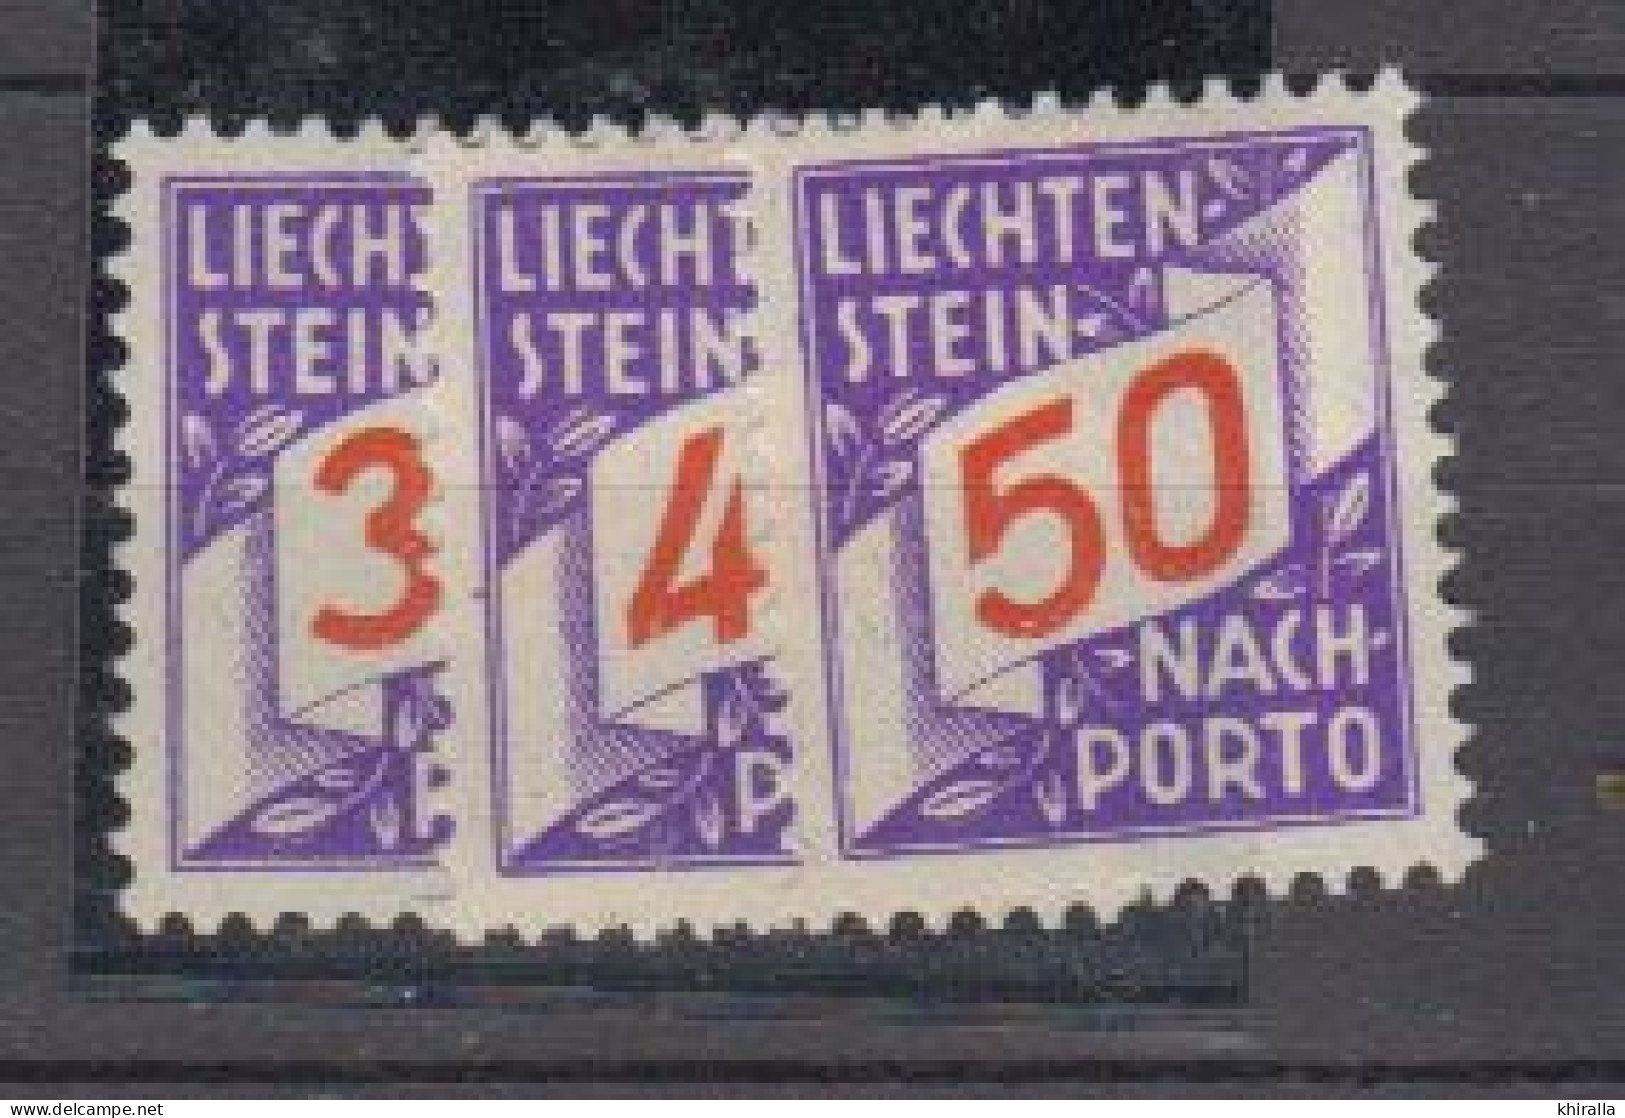 LIECHTENSTEIN   1928    Taxe     N°  18  / 20    ( Nehf Sans Charniére )      COTE   81 € 00        ( D 393 ) - Portomarken